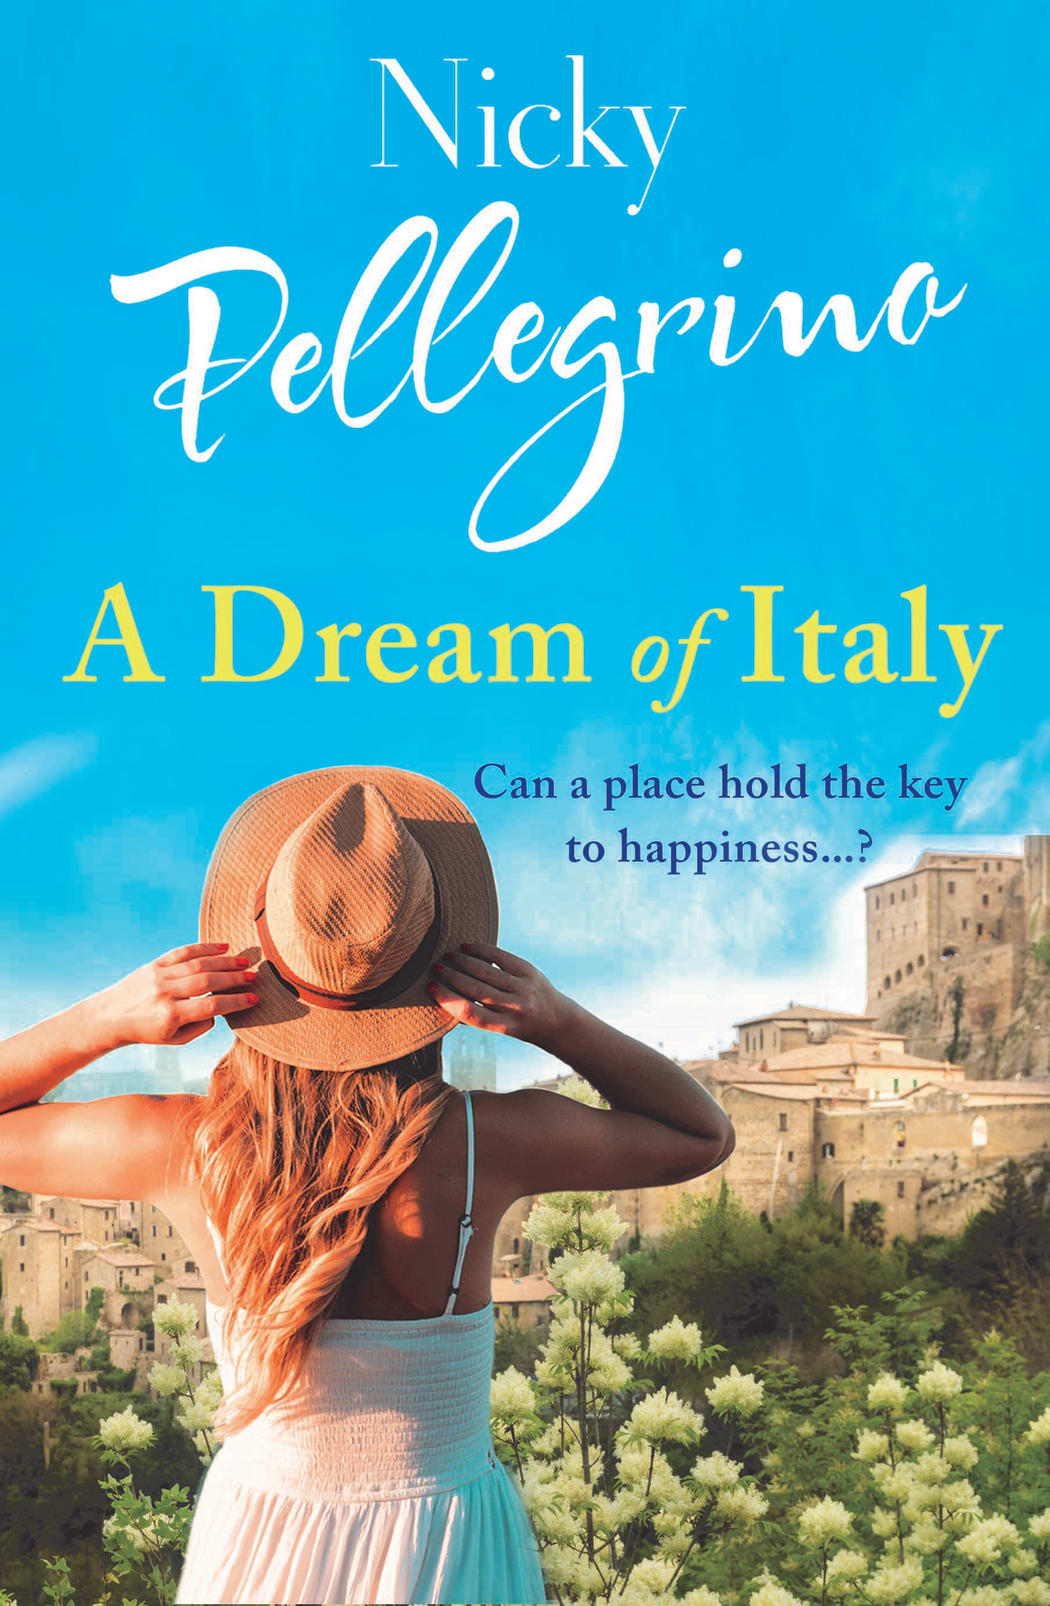 Nicky Pellegrino - A Dream of Italy